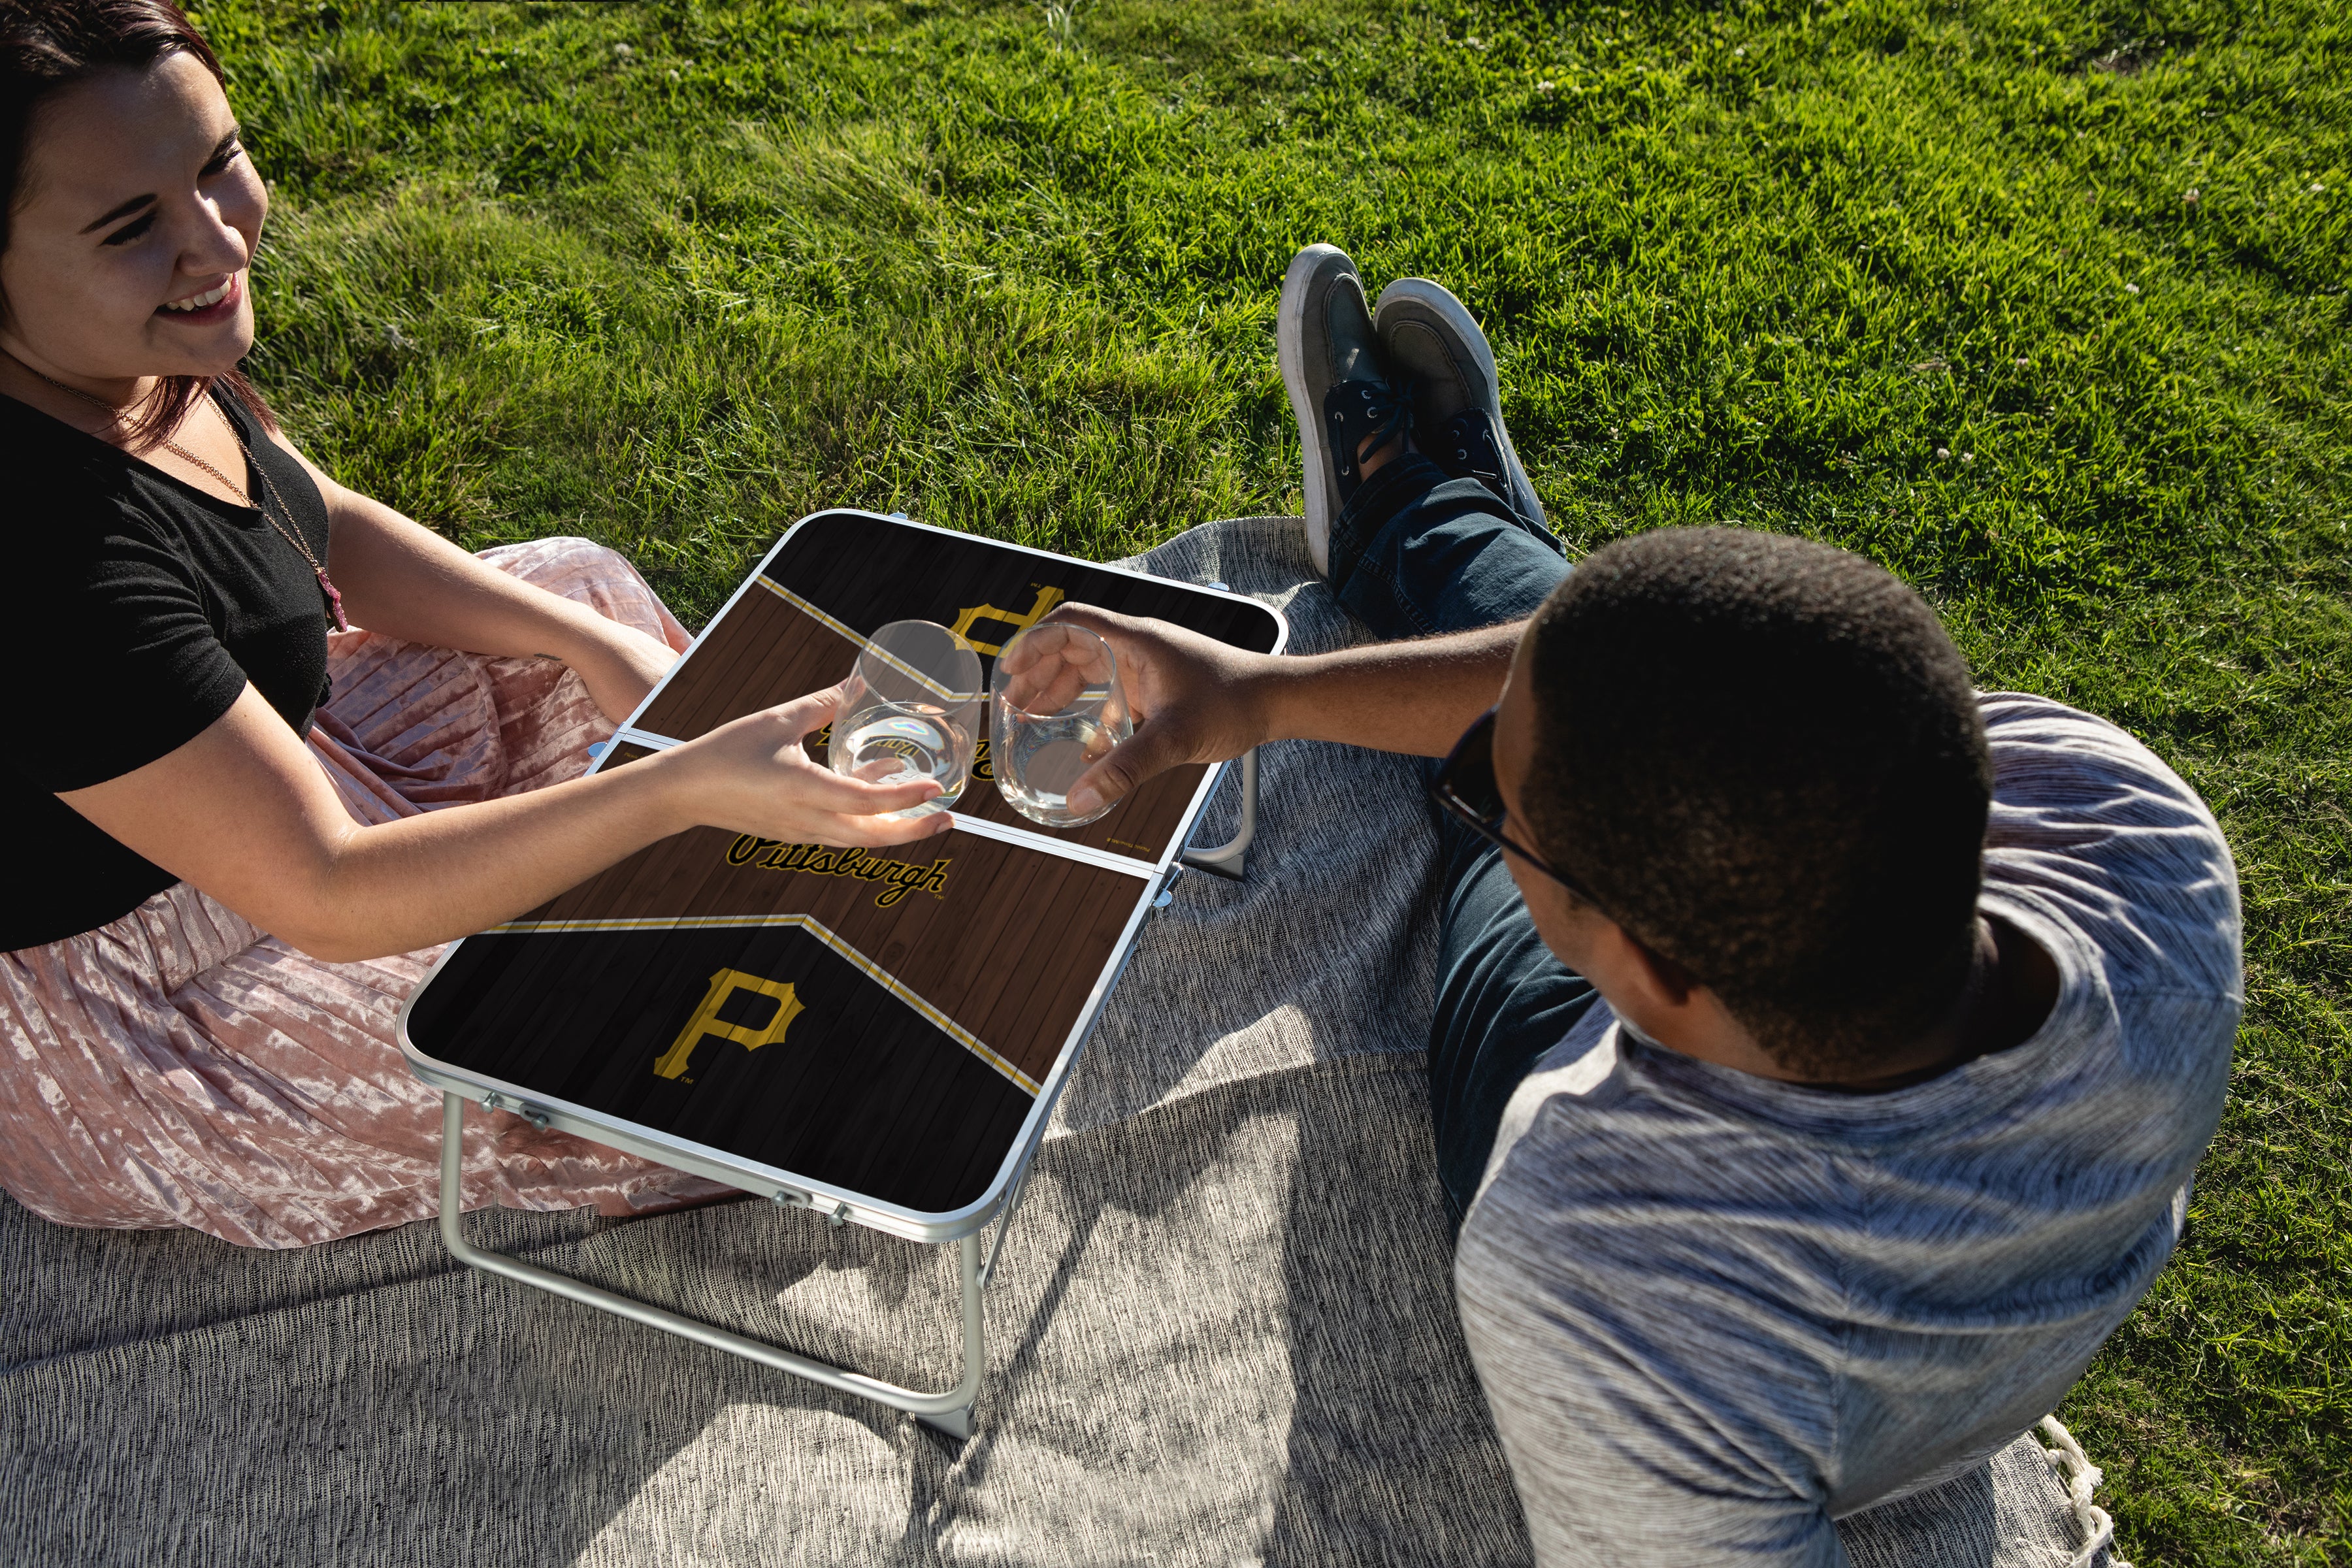 Pittsburgh Pirates - Concert Table Mini Portable Table